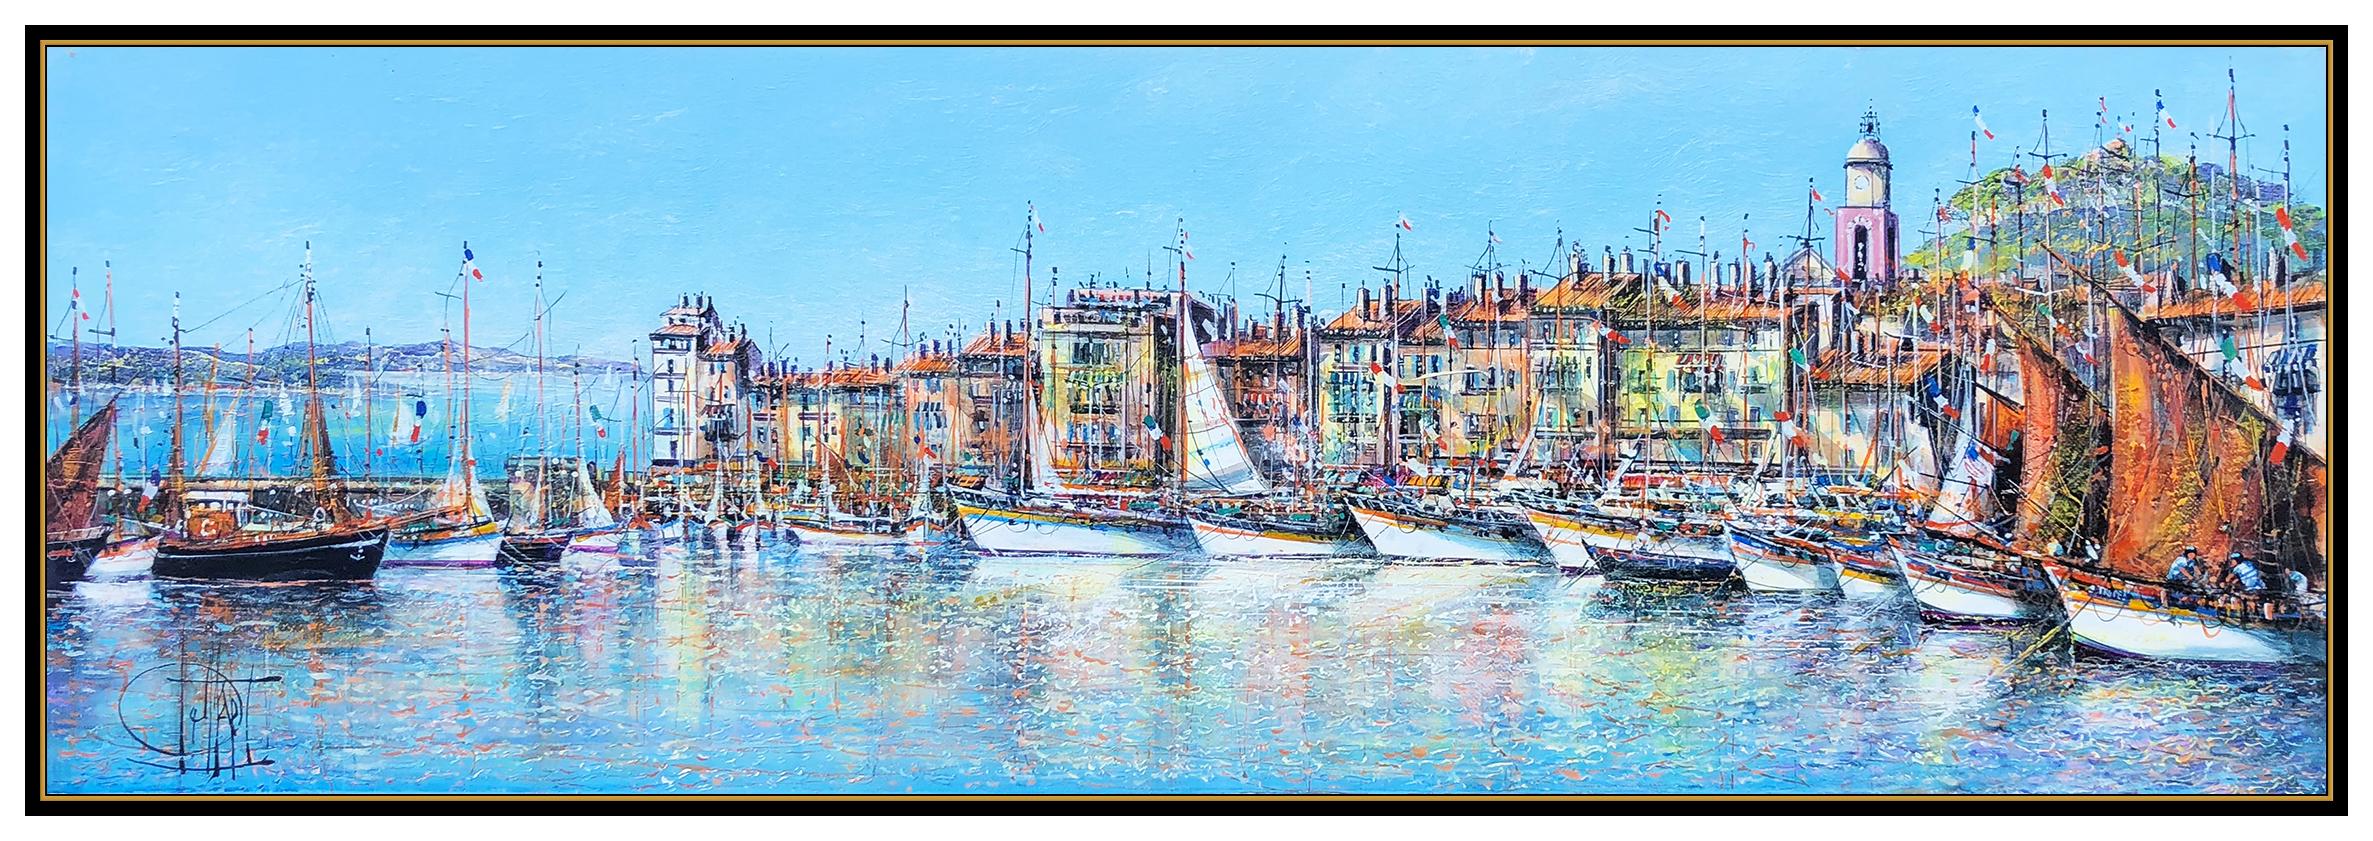 Guy Dessapt Original Painting Large Oil On Canvas French Landscape Harbor Art 1